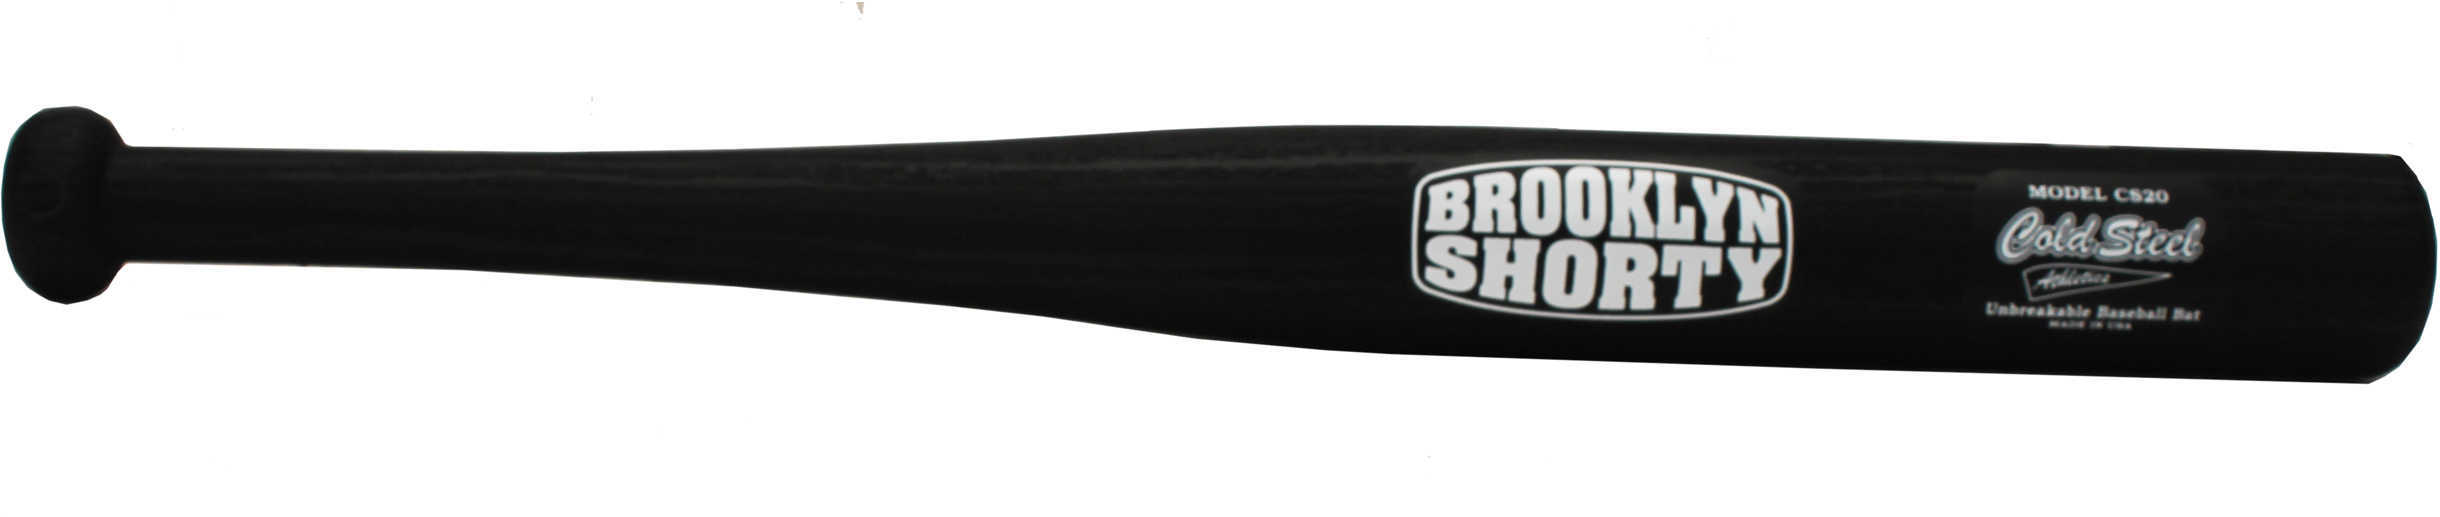 Cold Steel Brooklyn Bats Shorty Md: 92BSTZ